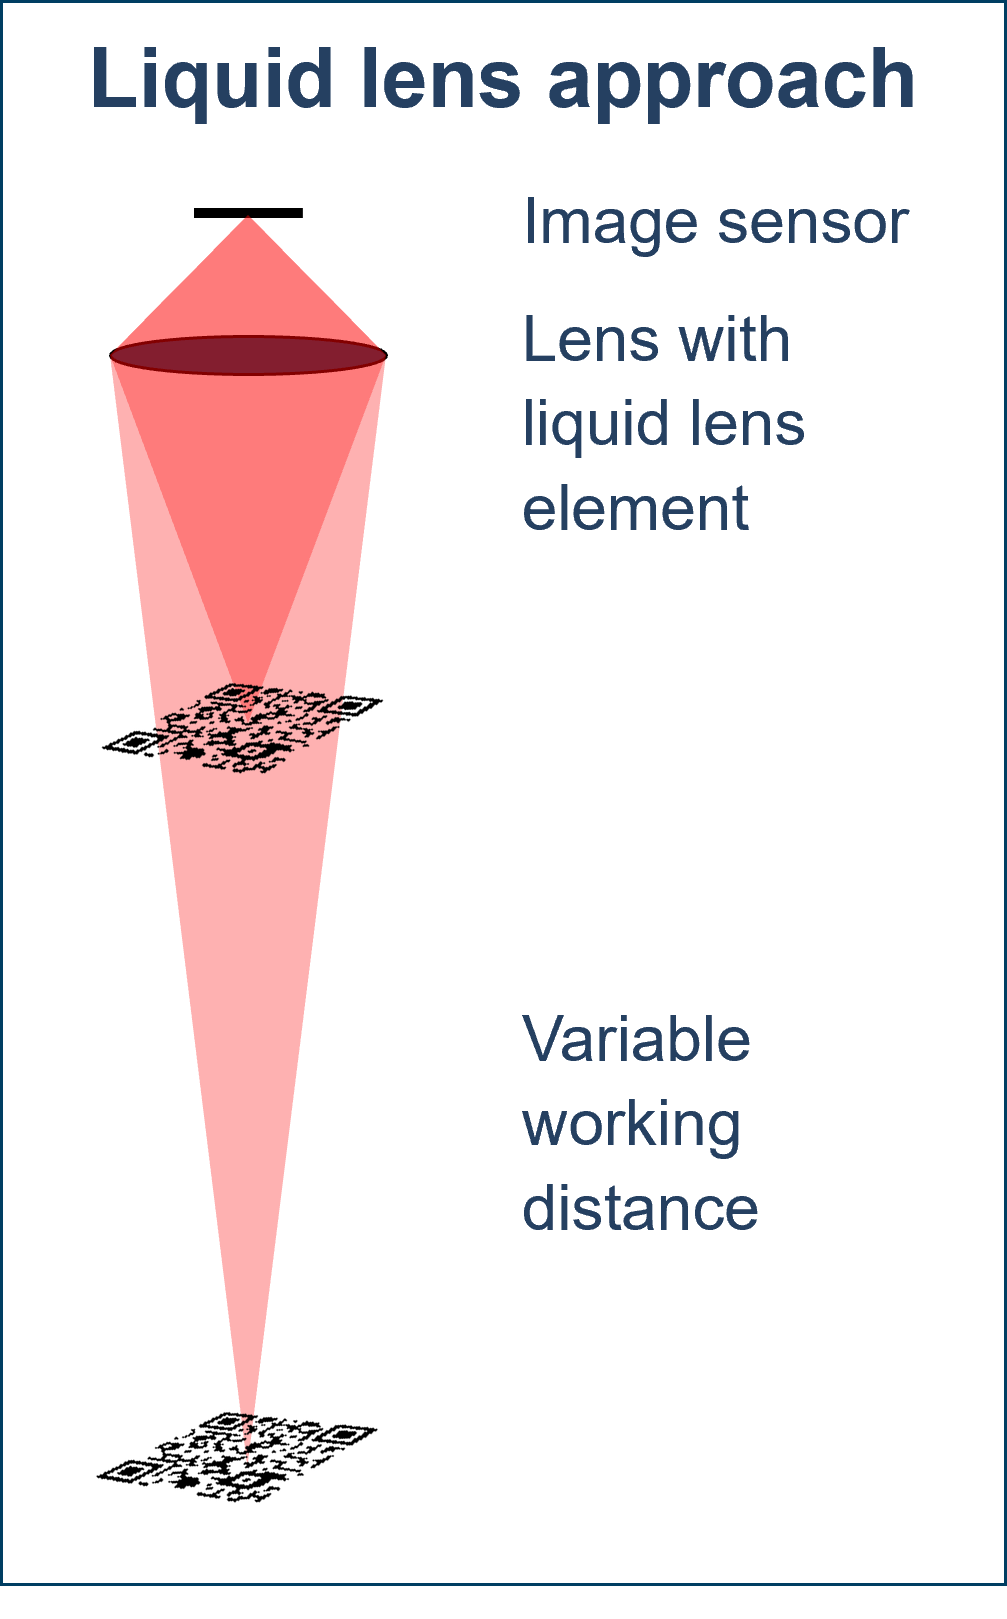 Liquid lens approach